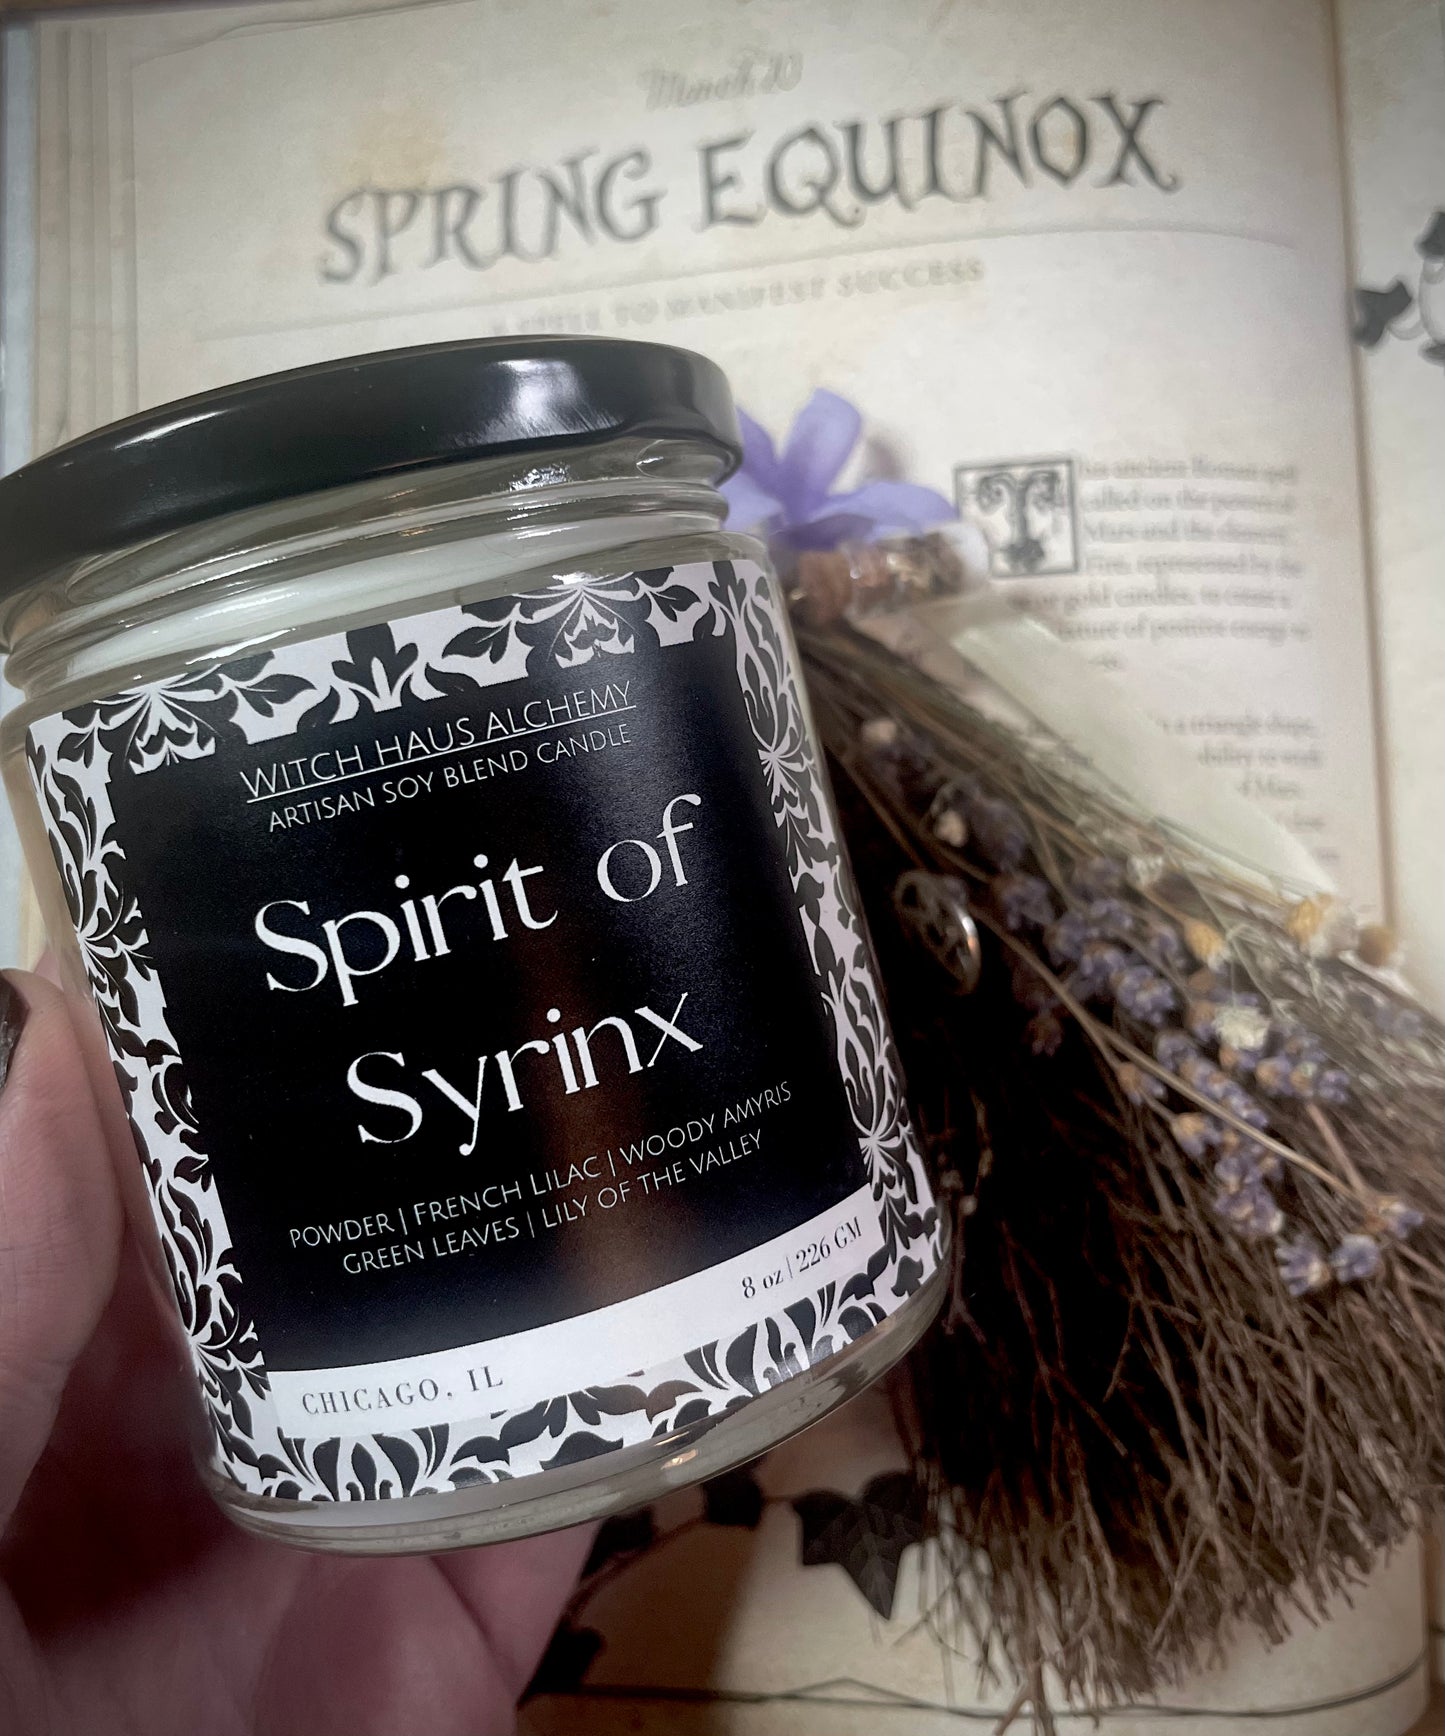 Spirit of Syrinx | 6 oz Candle